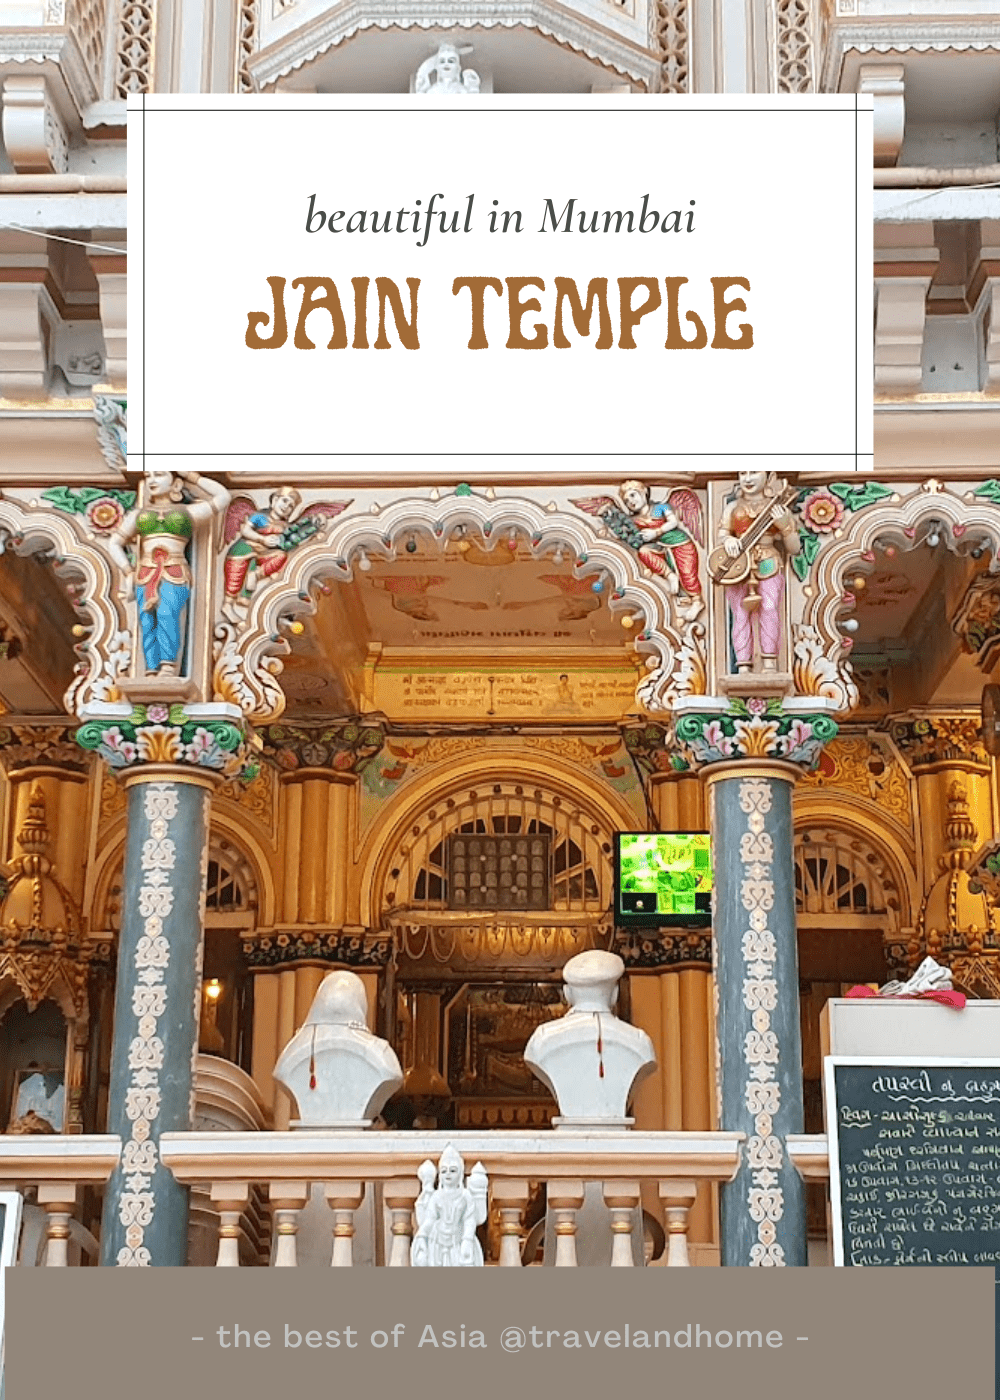 Jain temple visit and explore mumbai india asia min